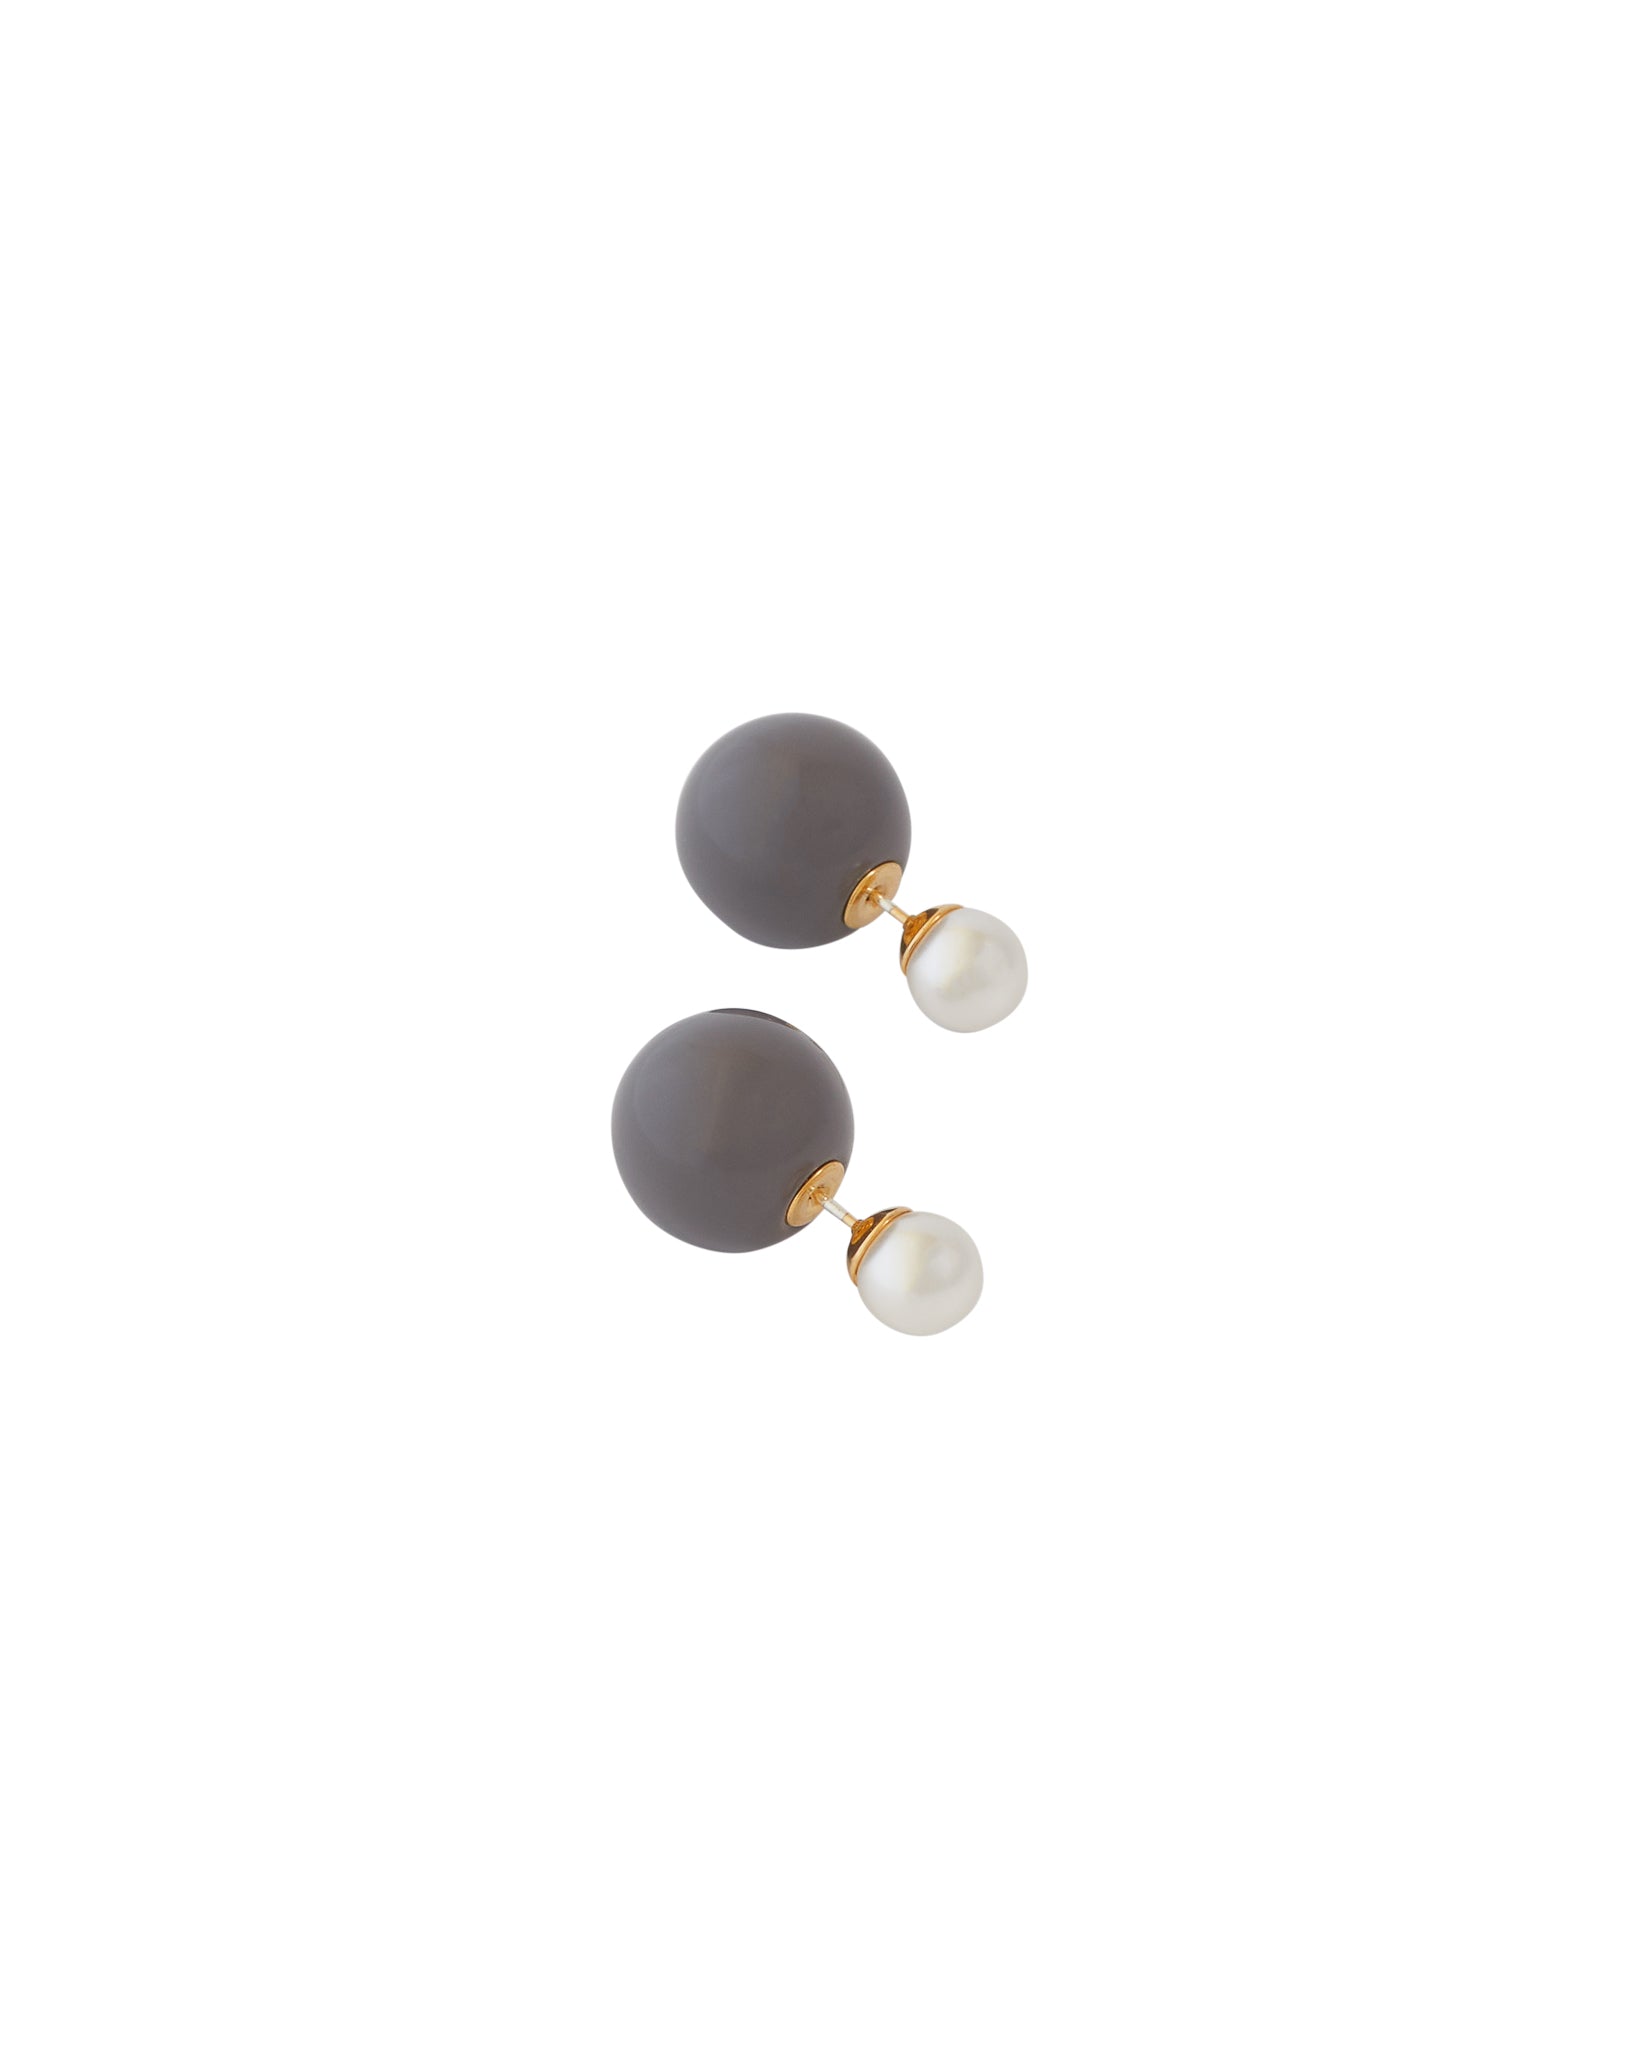 Double Ball Earrings - Charcoal/Pearl